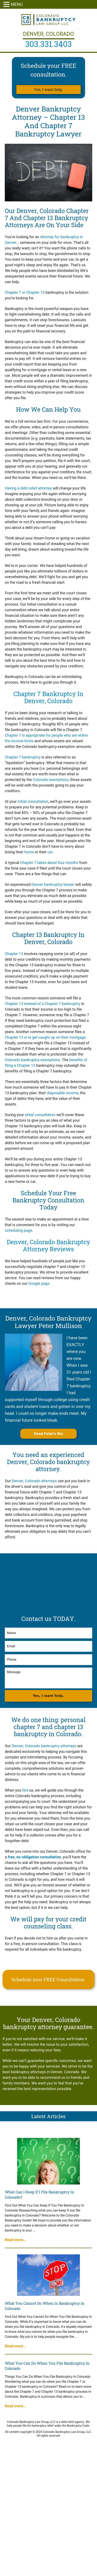 Colorado Bankruptcy Law Group, LLC - Denver CO Lawyers